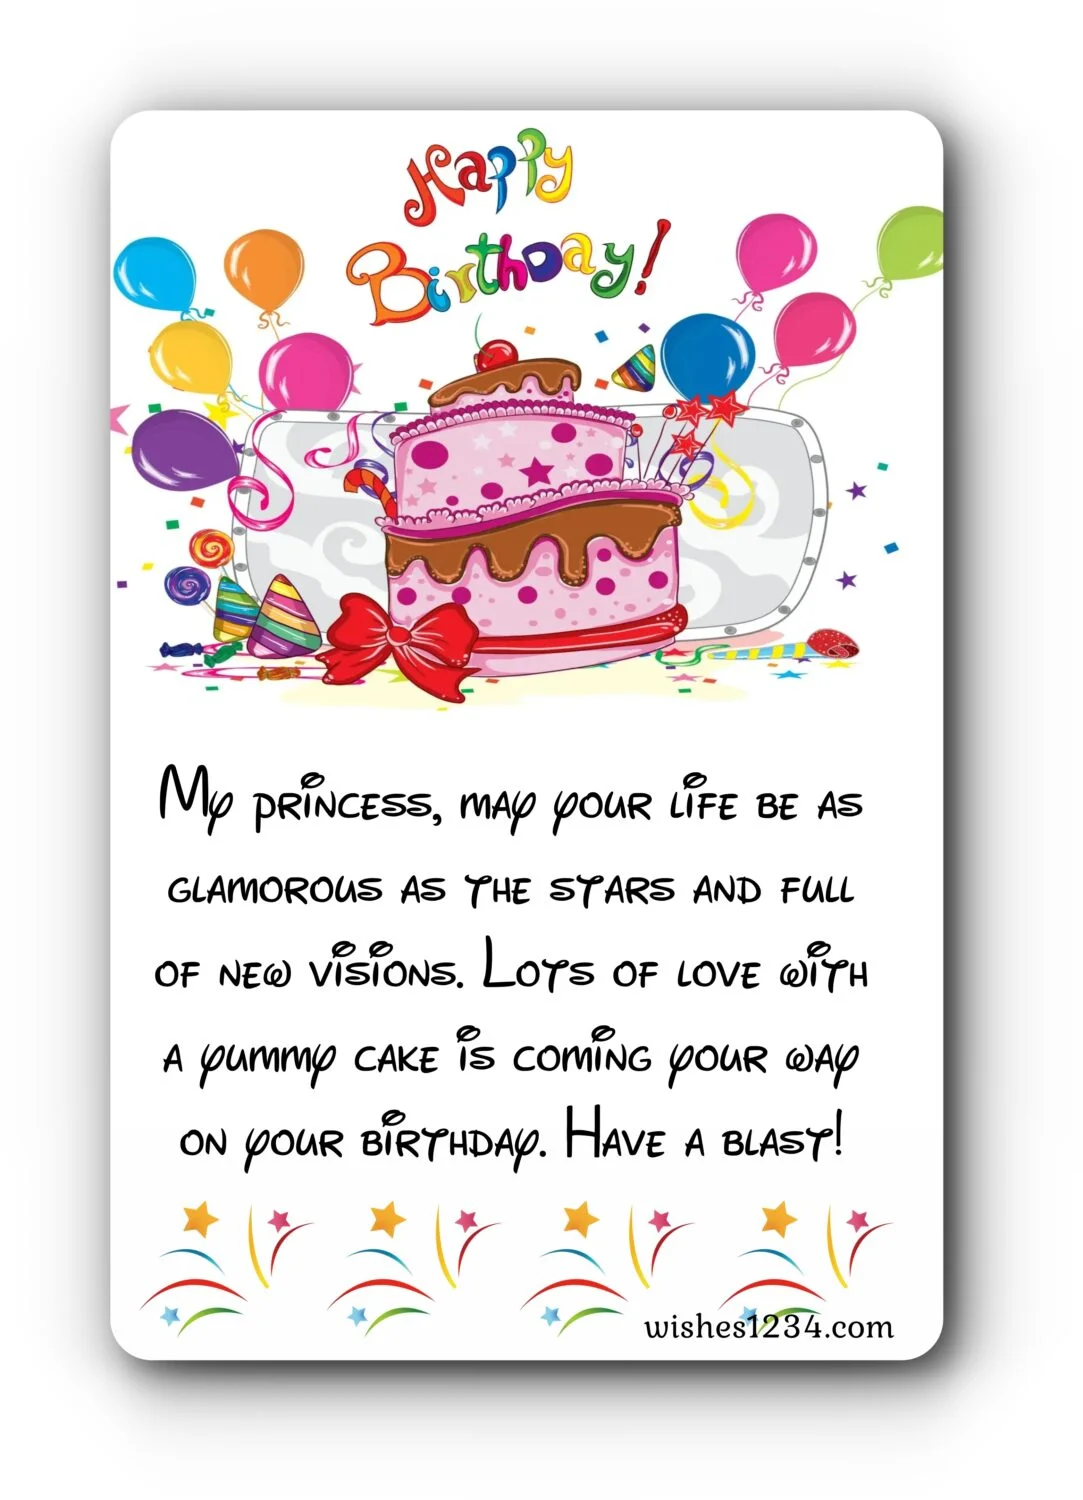 Birthday cake with balloons, Kids birthday | Happy Birthday wishes for kids.